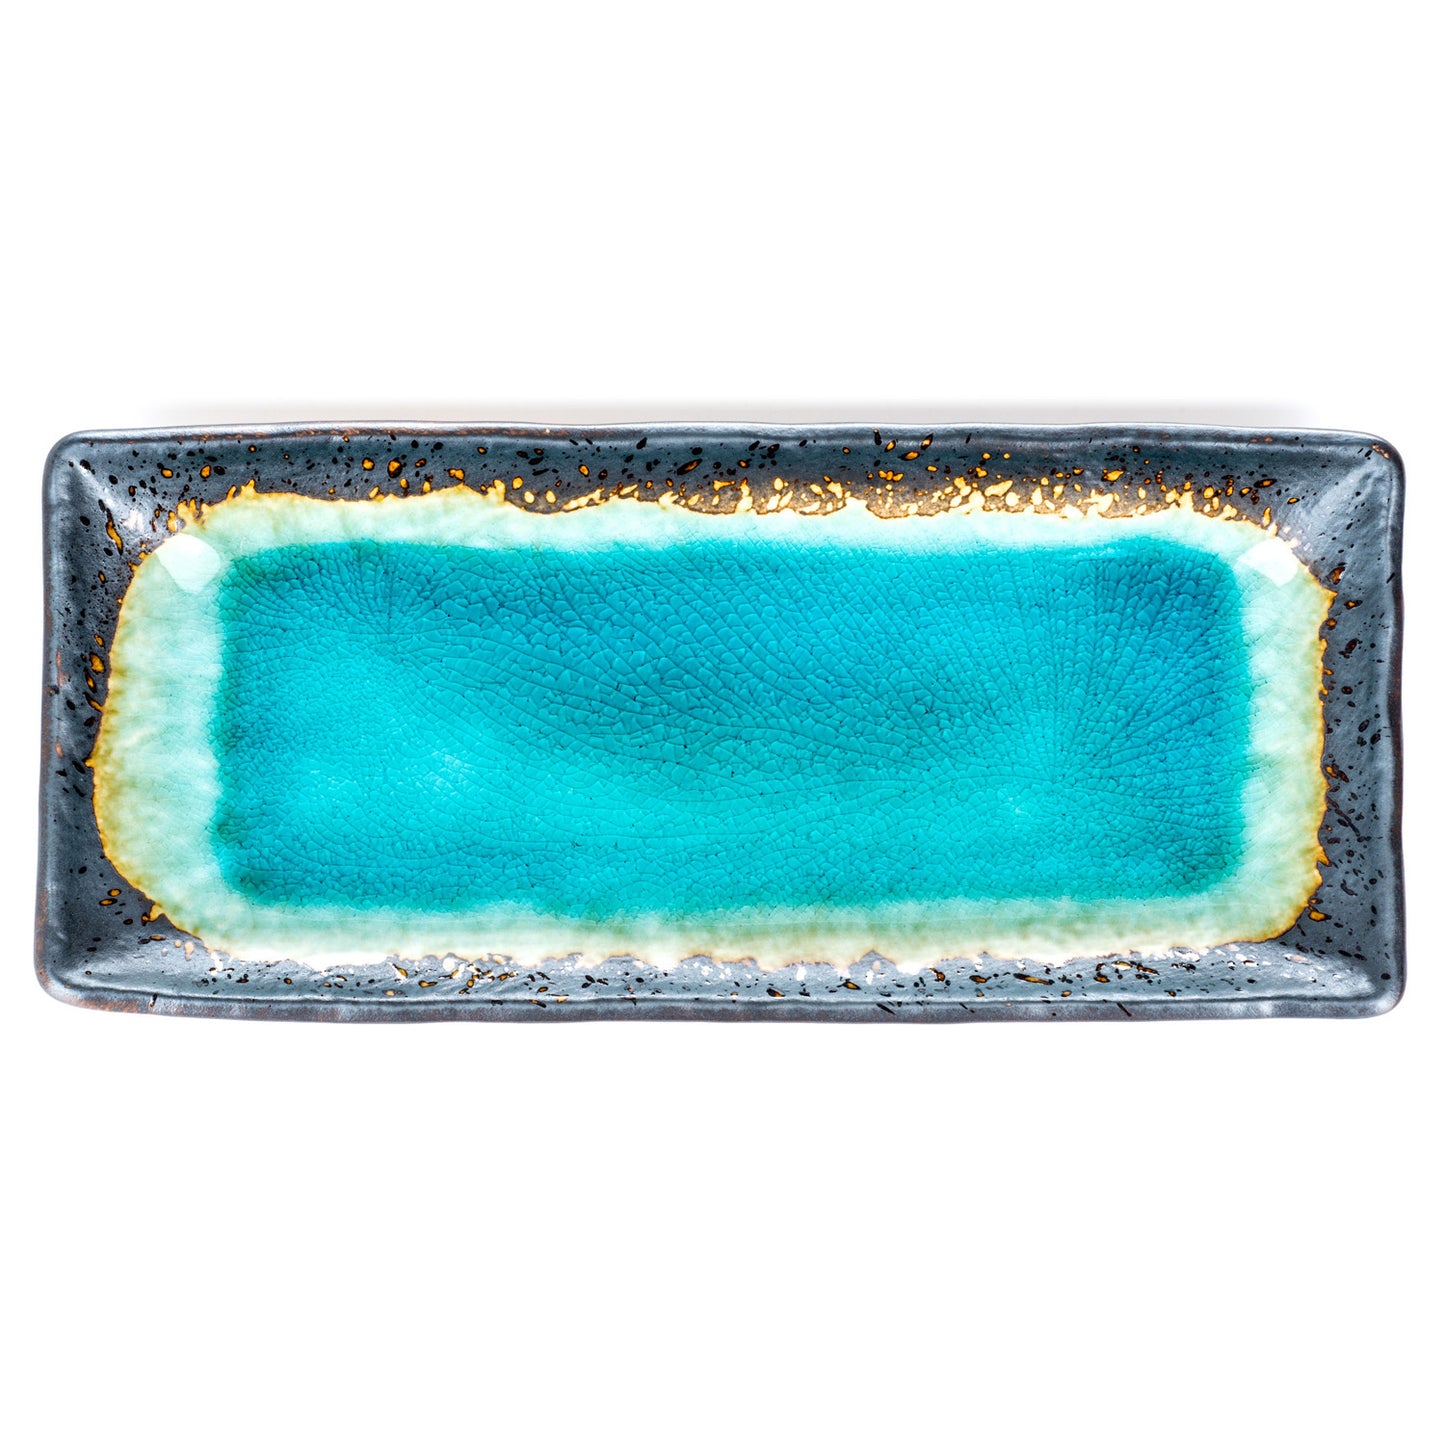 Turquoise Crackleglaze Oblong Plate